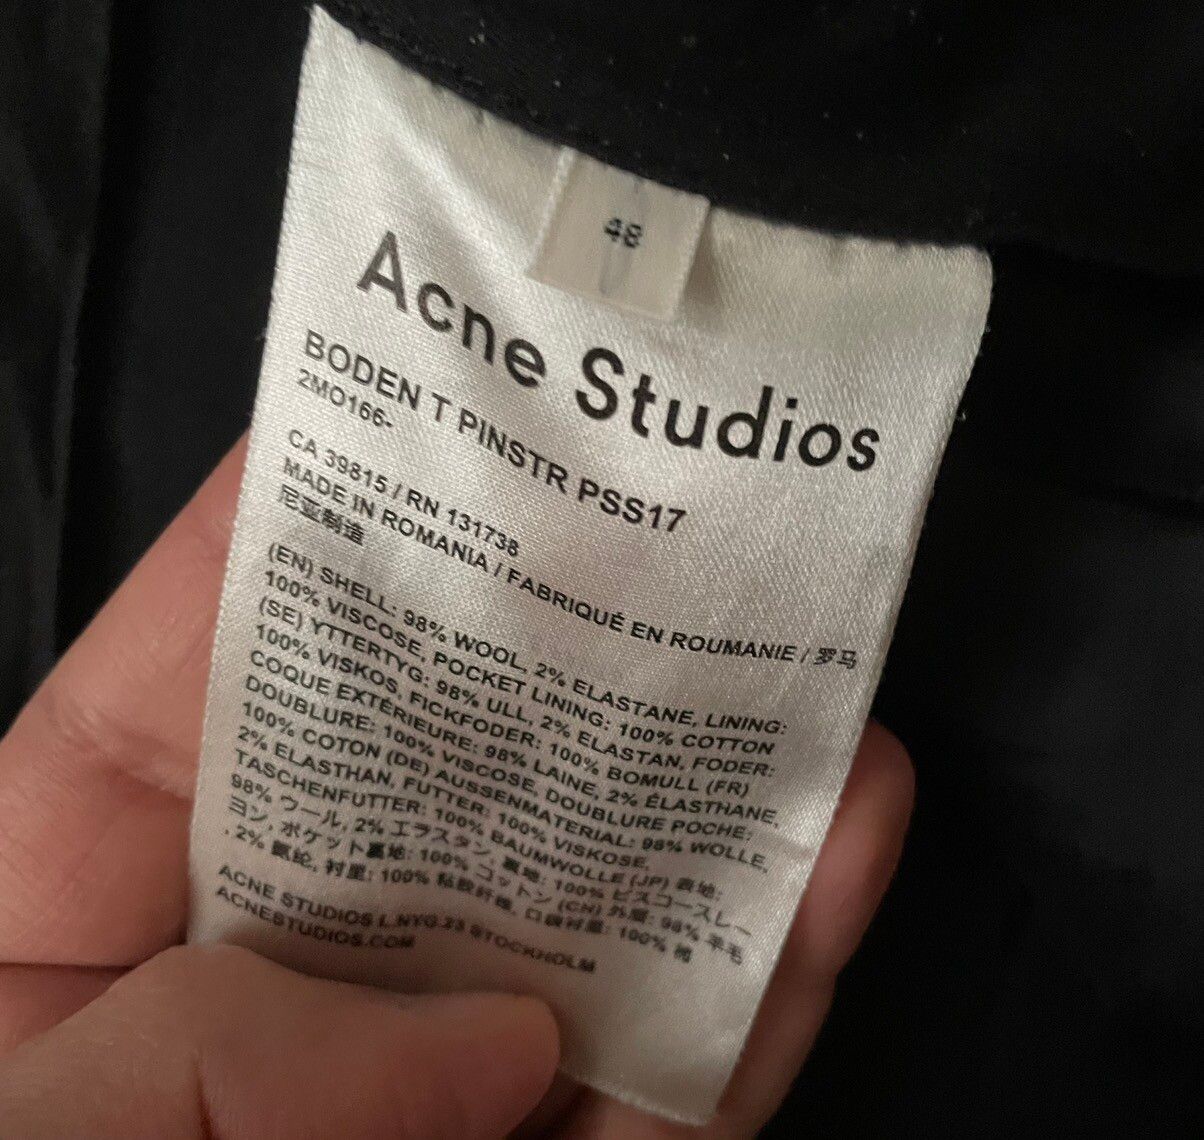 Acne Studios Boden Pinstripe SS17 - 3